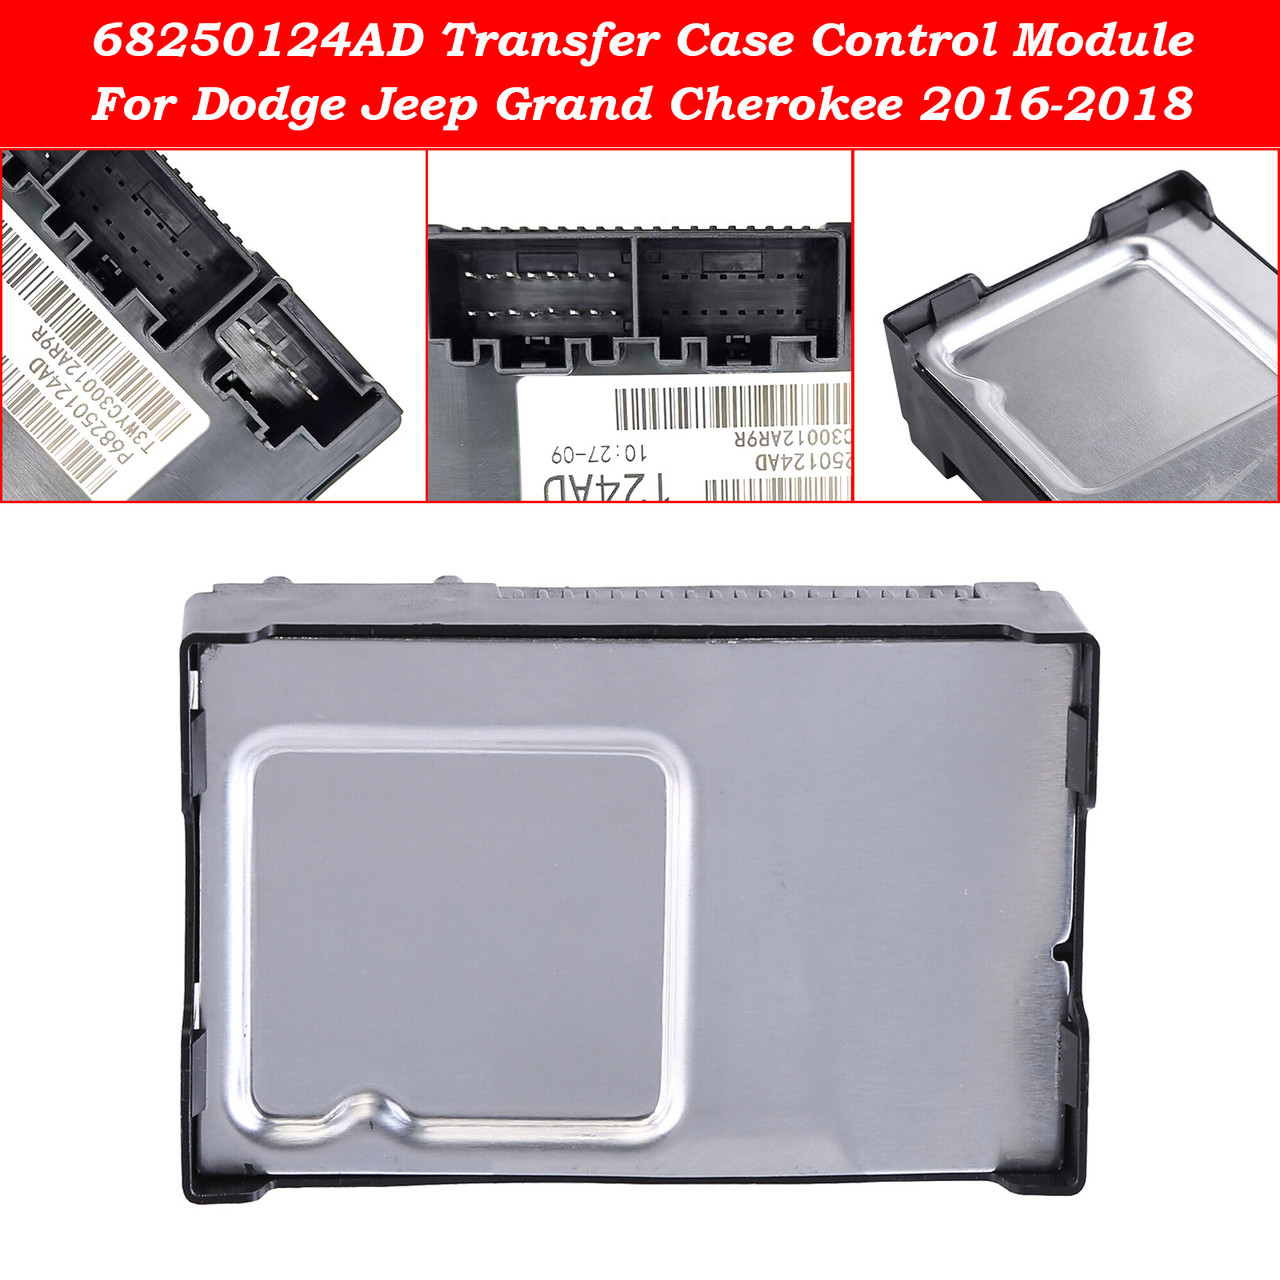 68250124AD Transfer Case Control Module For Dodge Jeep Grand Cherokee 2016-2018